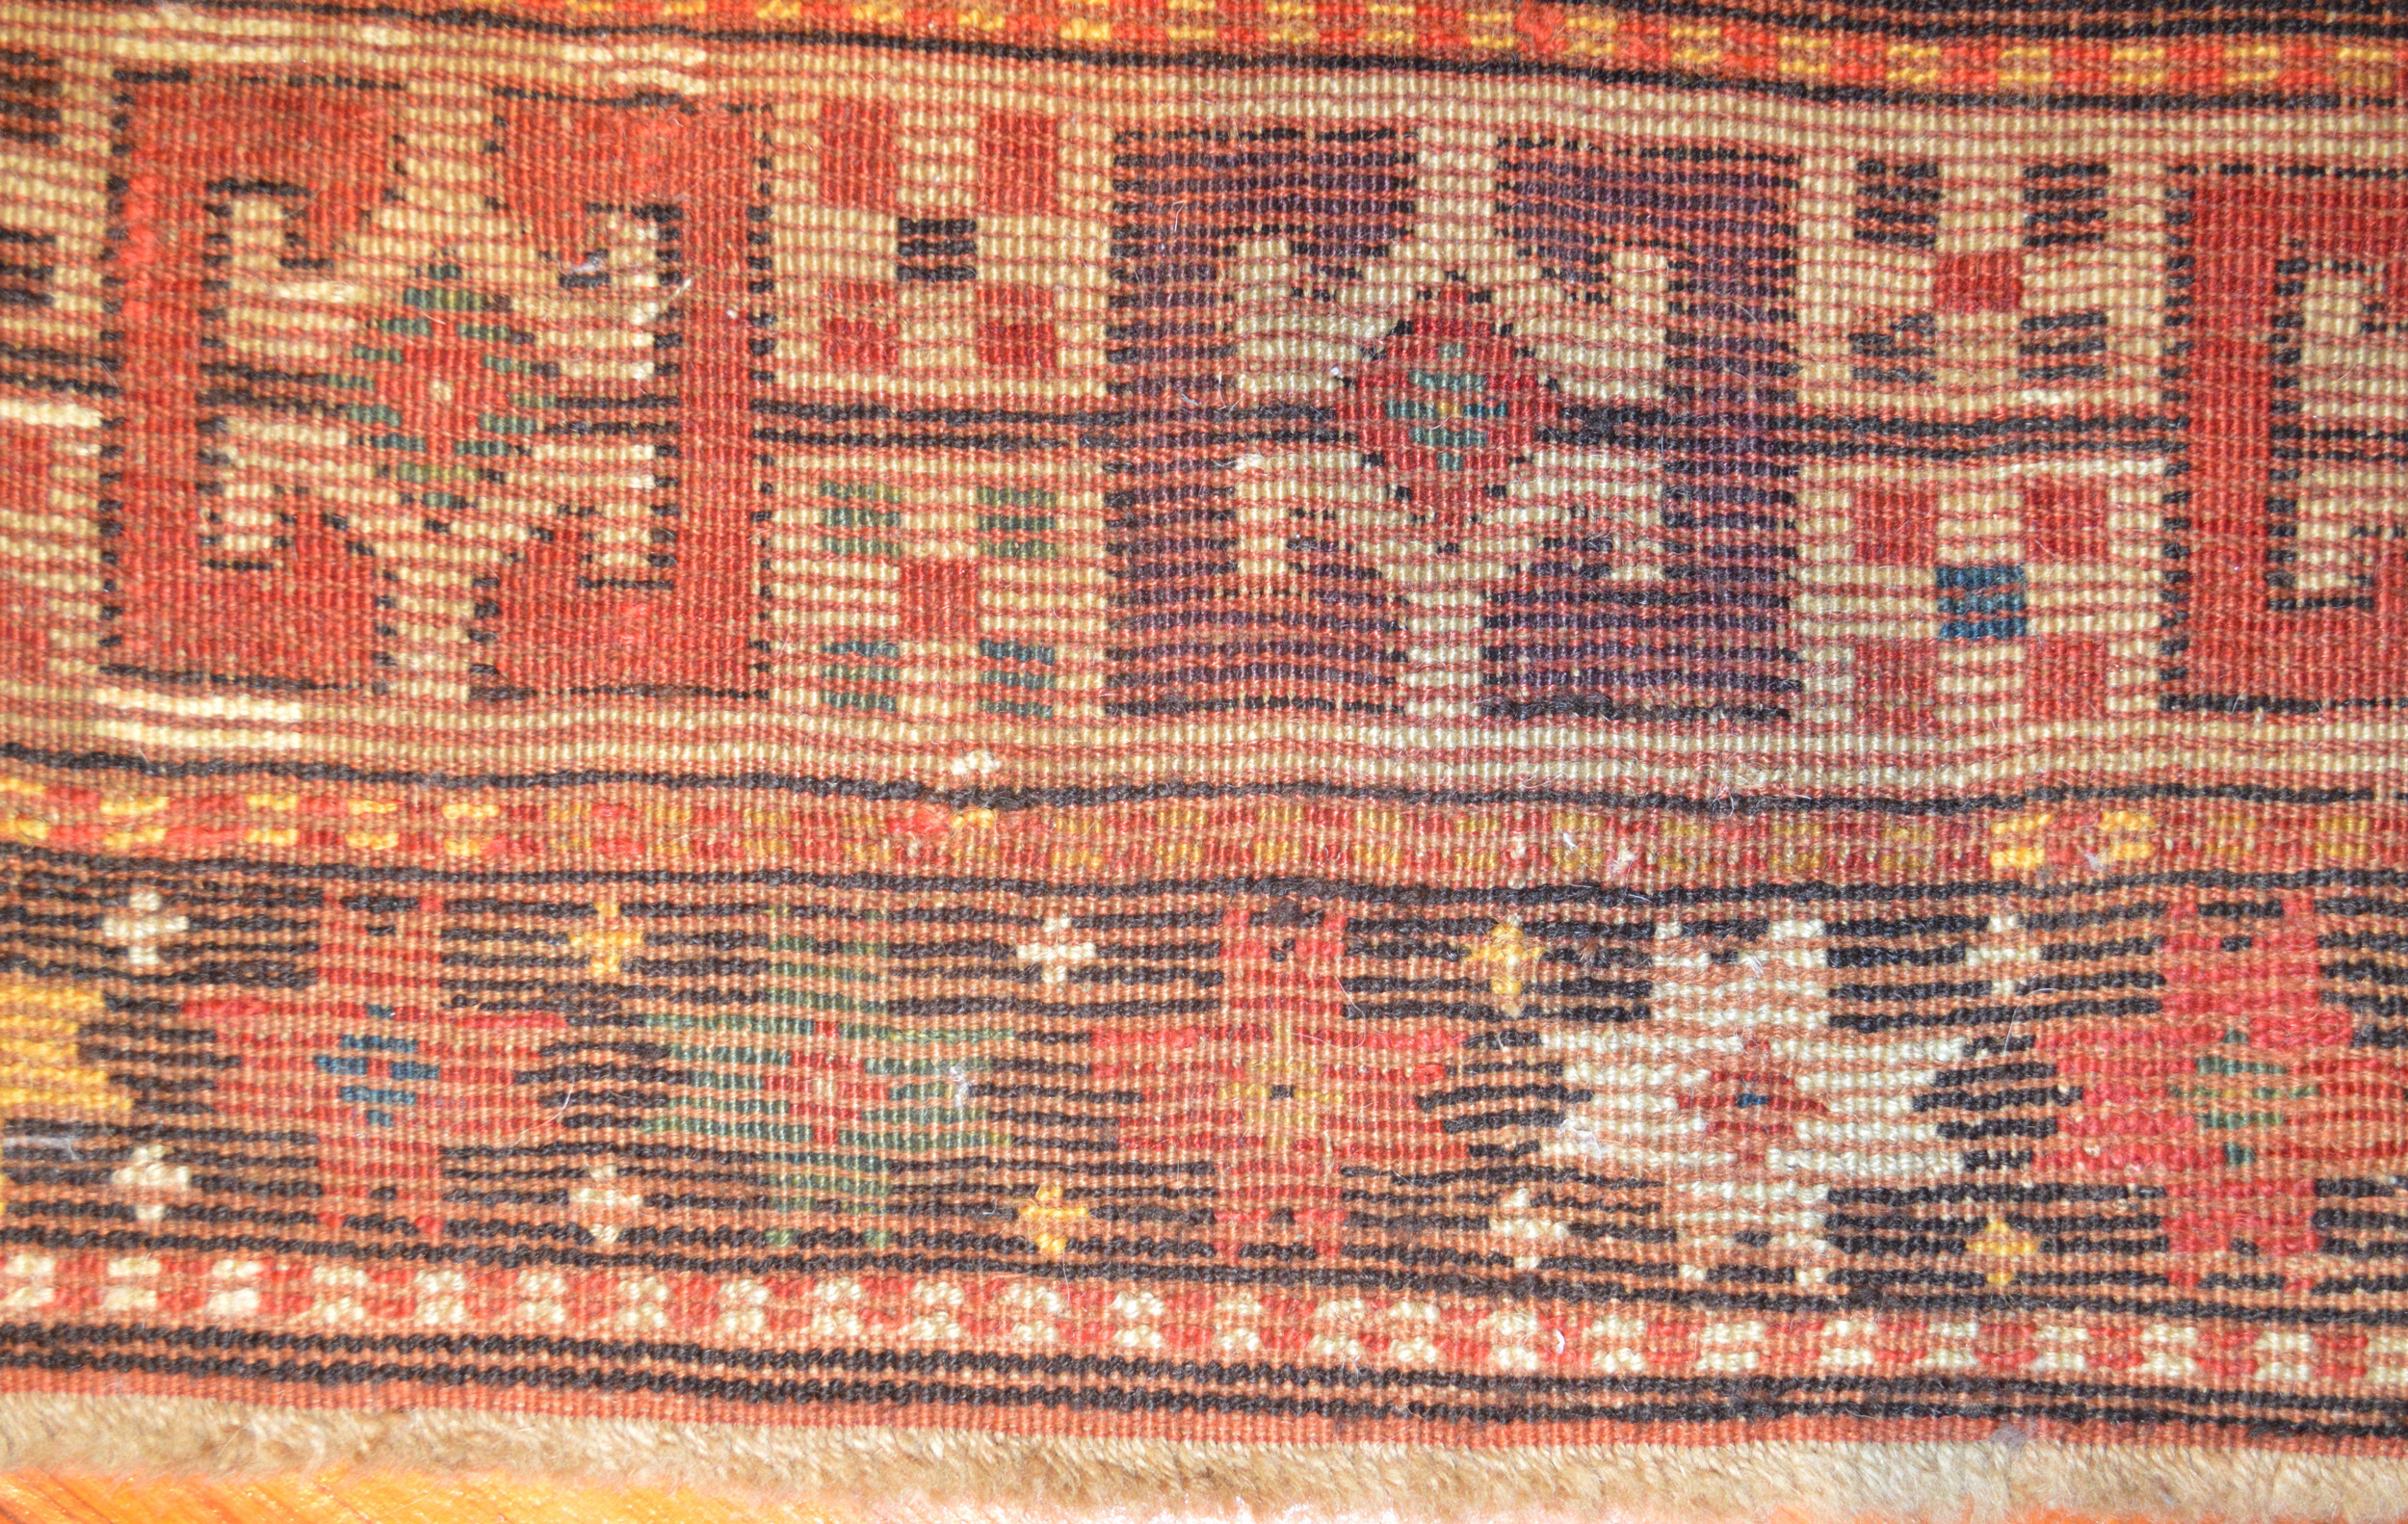 Rewoven and/or repiled areas in an antique Caucasian Karachoph Kazak rug